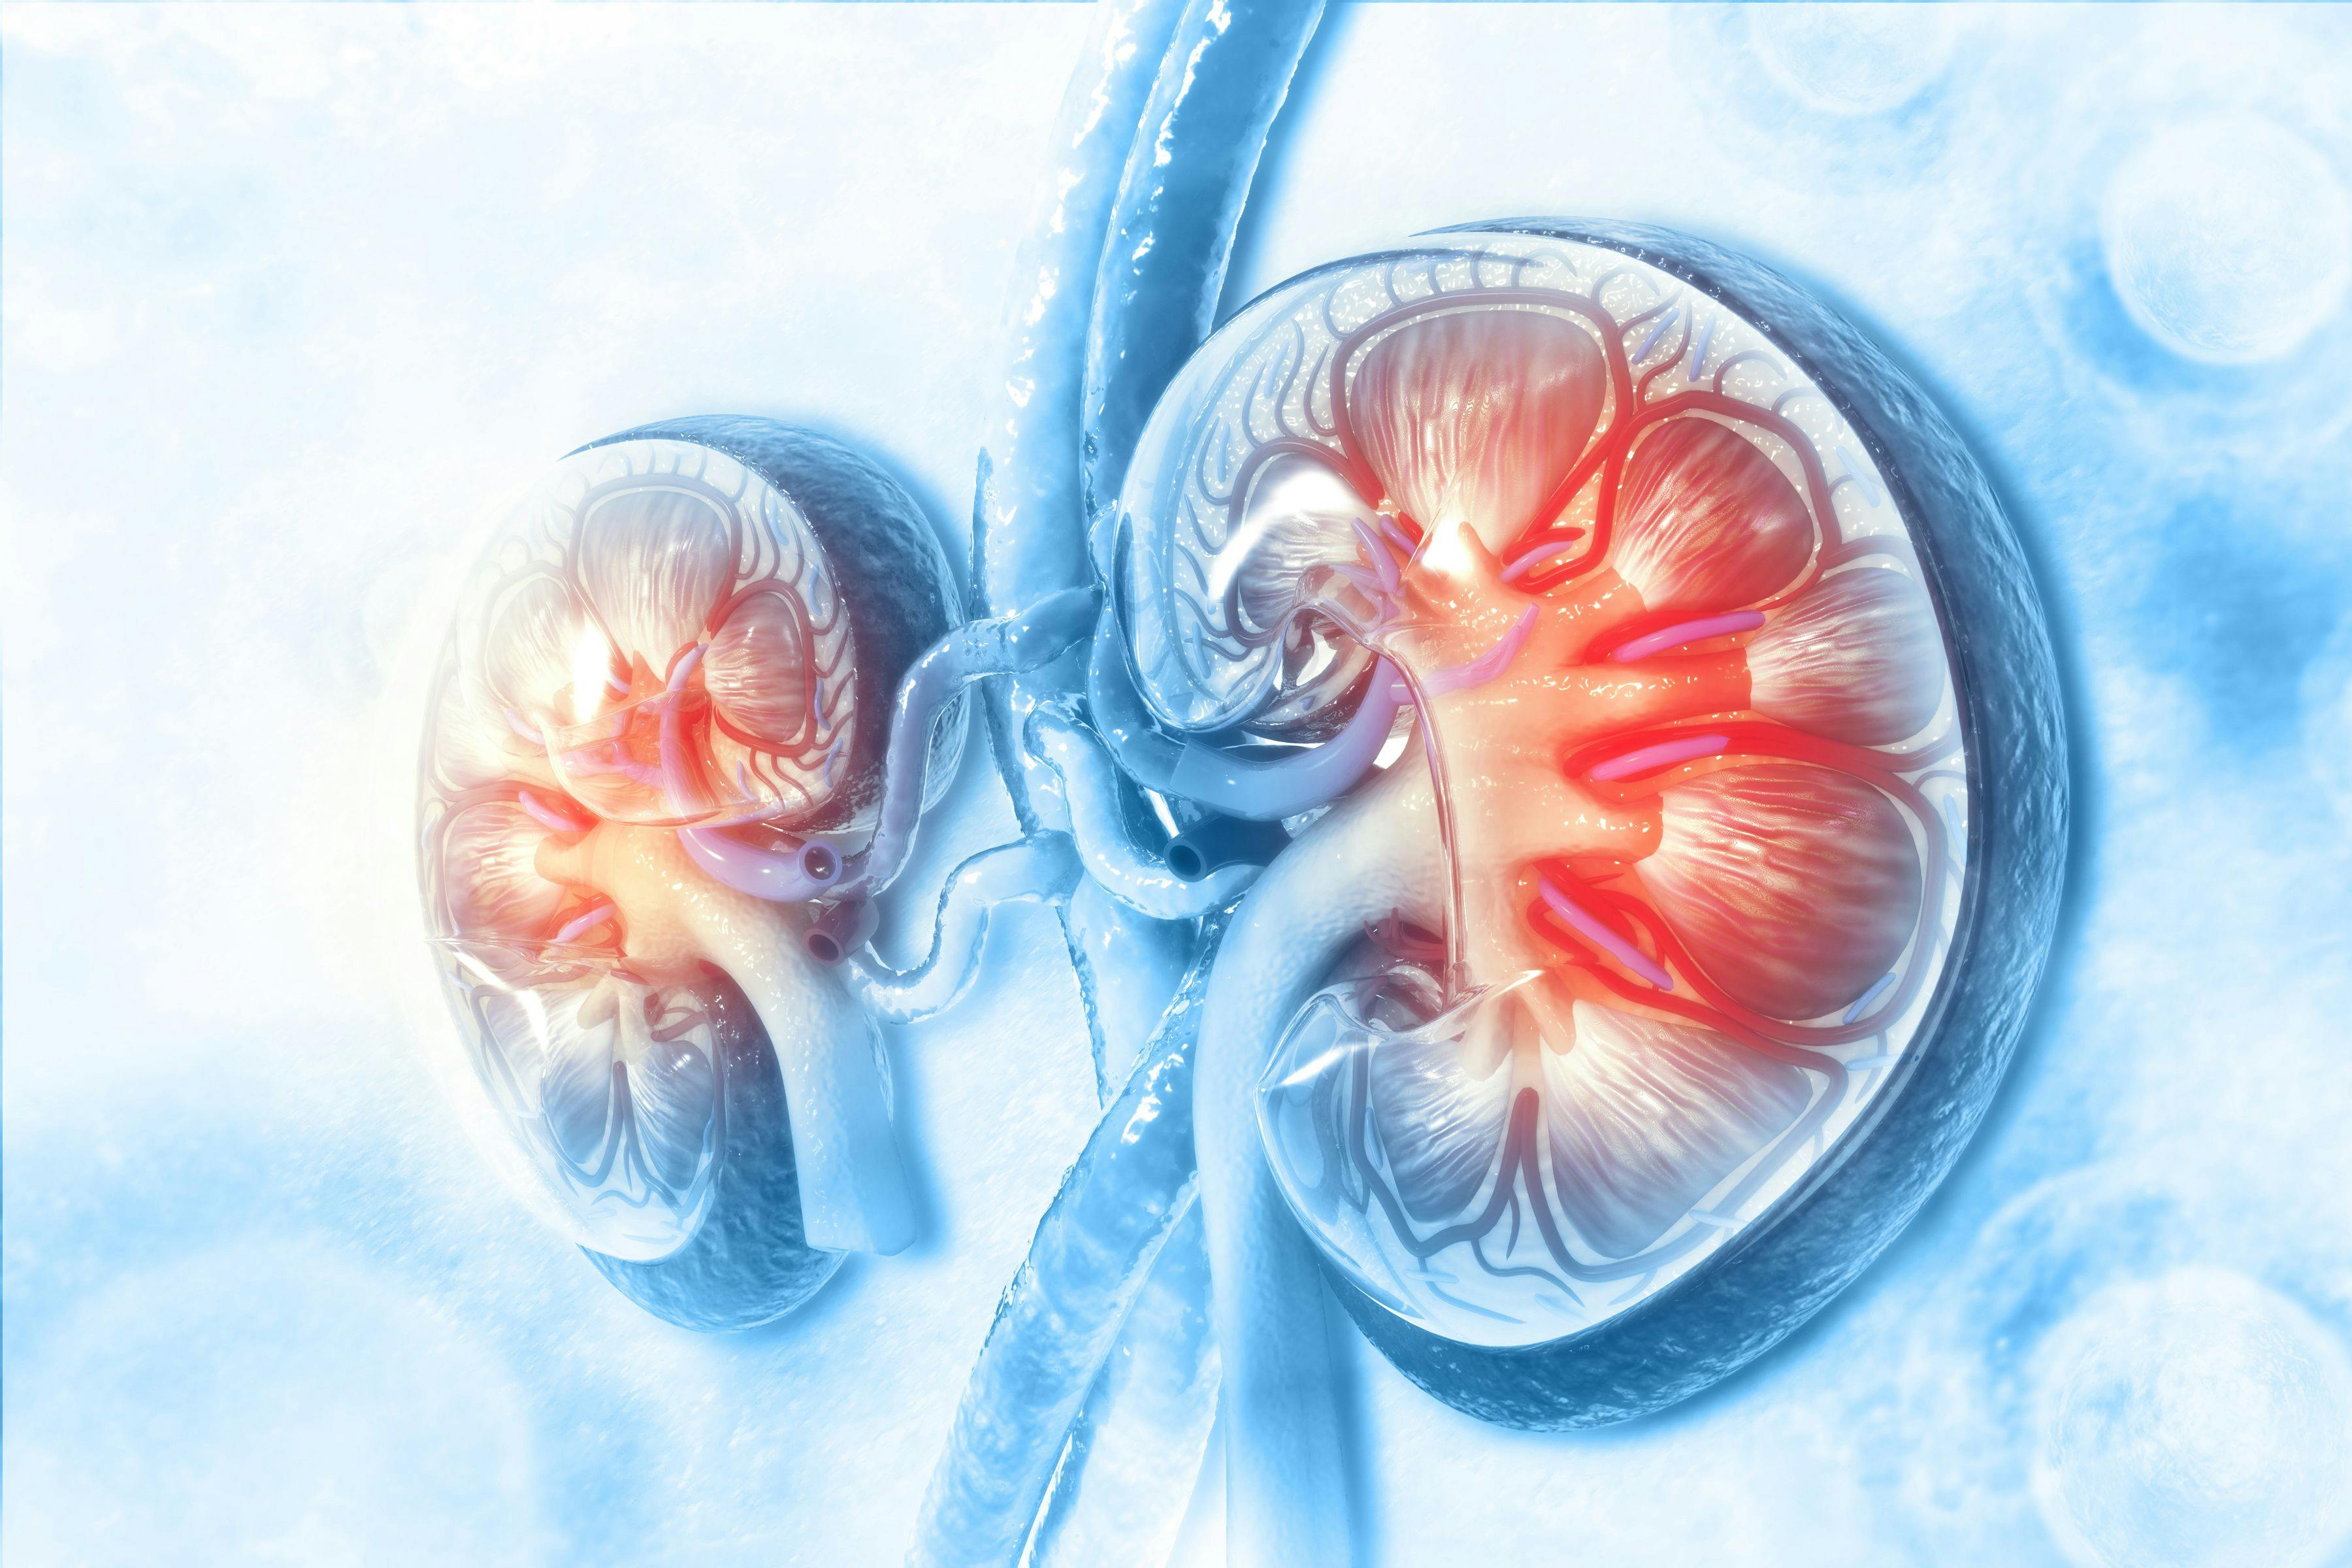 Human kidneys -- Image credit: Crystal light | stock.adobe.com